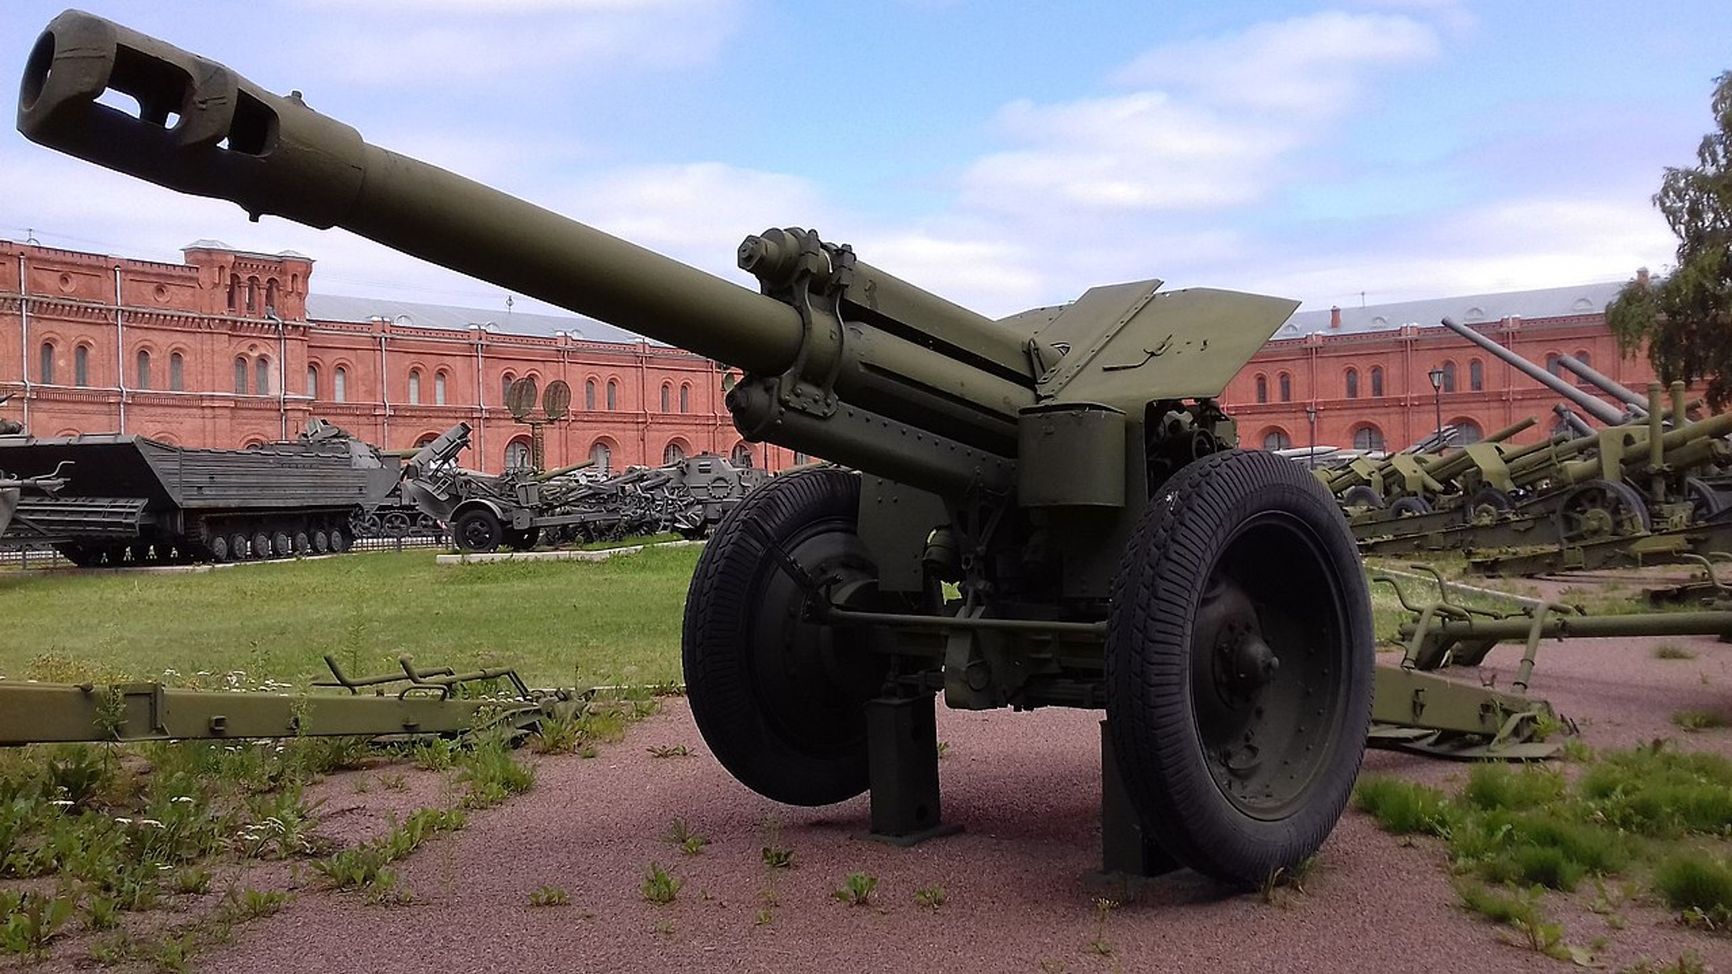 A D-1 howitzer in the artillery museum in St. Petersburg 